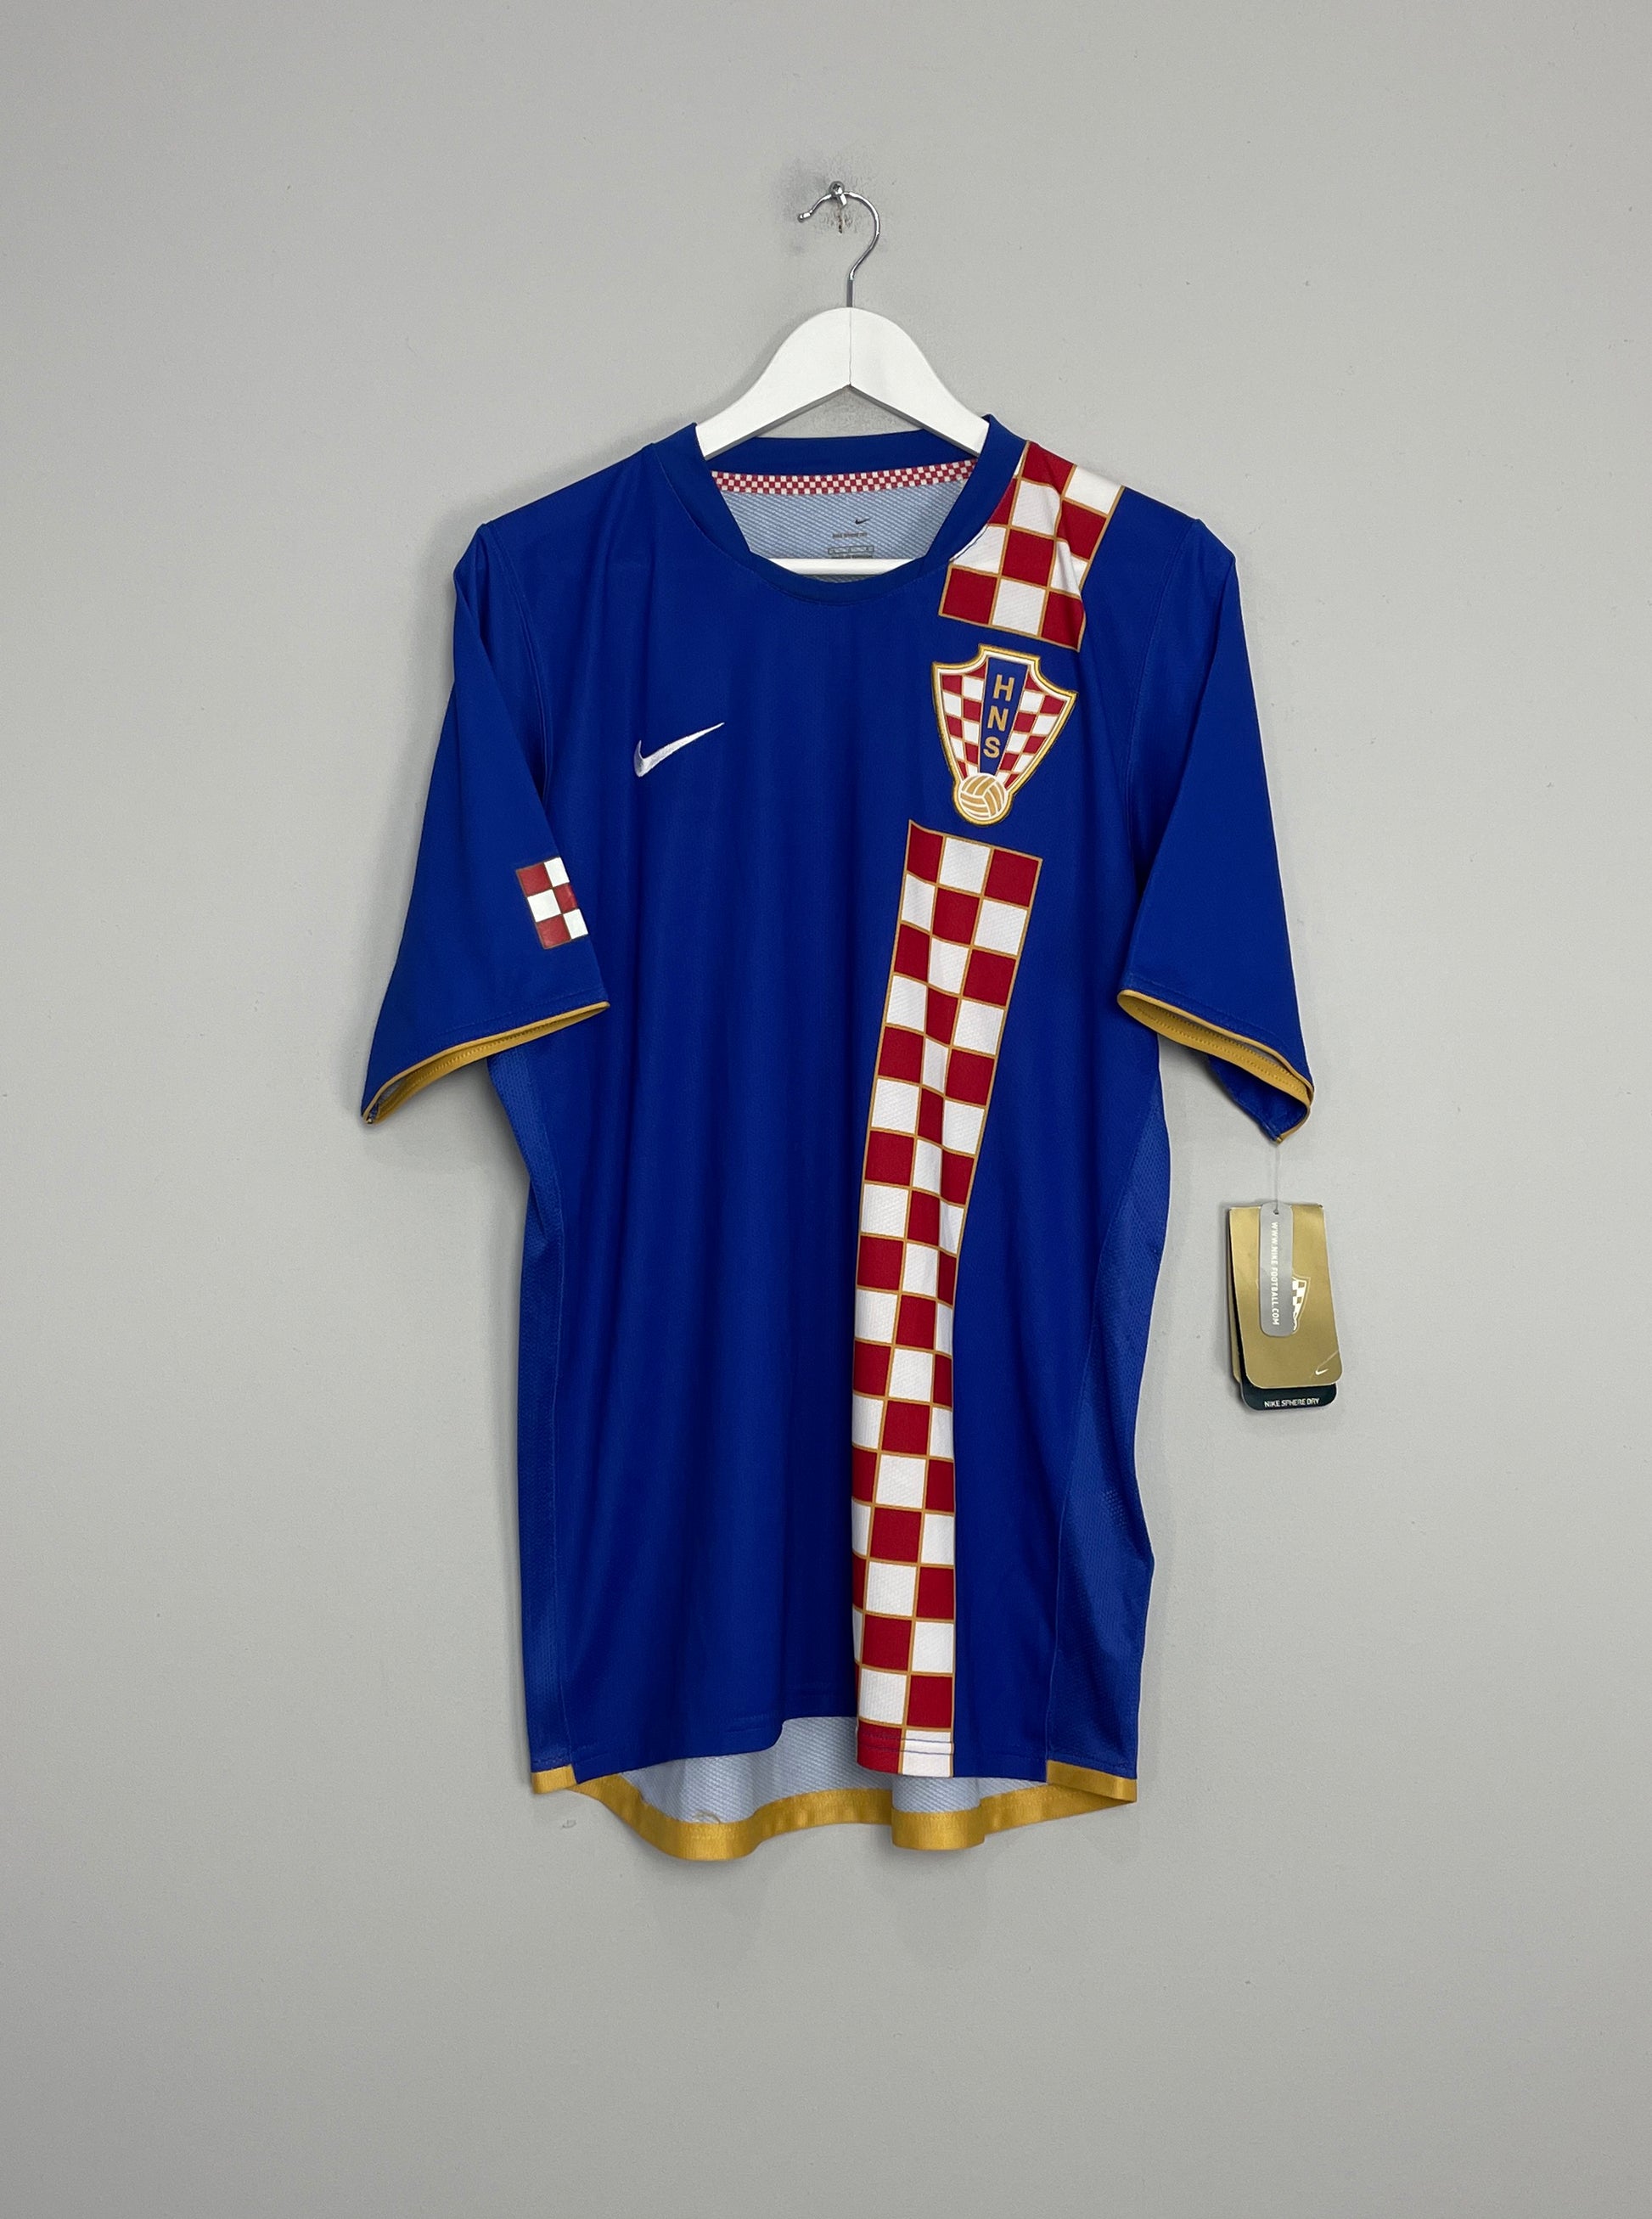 Image of the Croatia shirt from the 2006/07 season